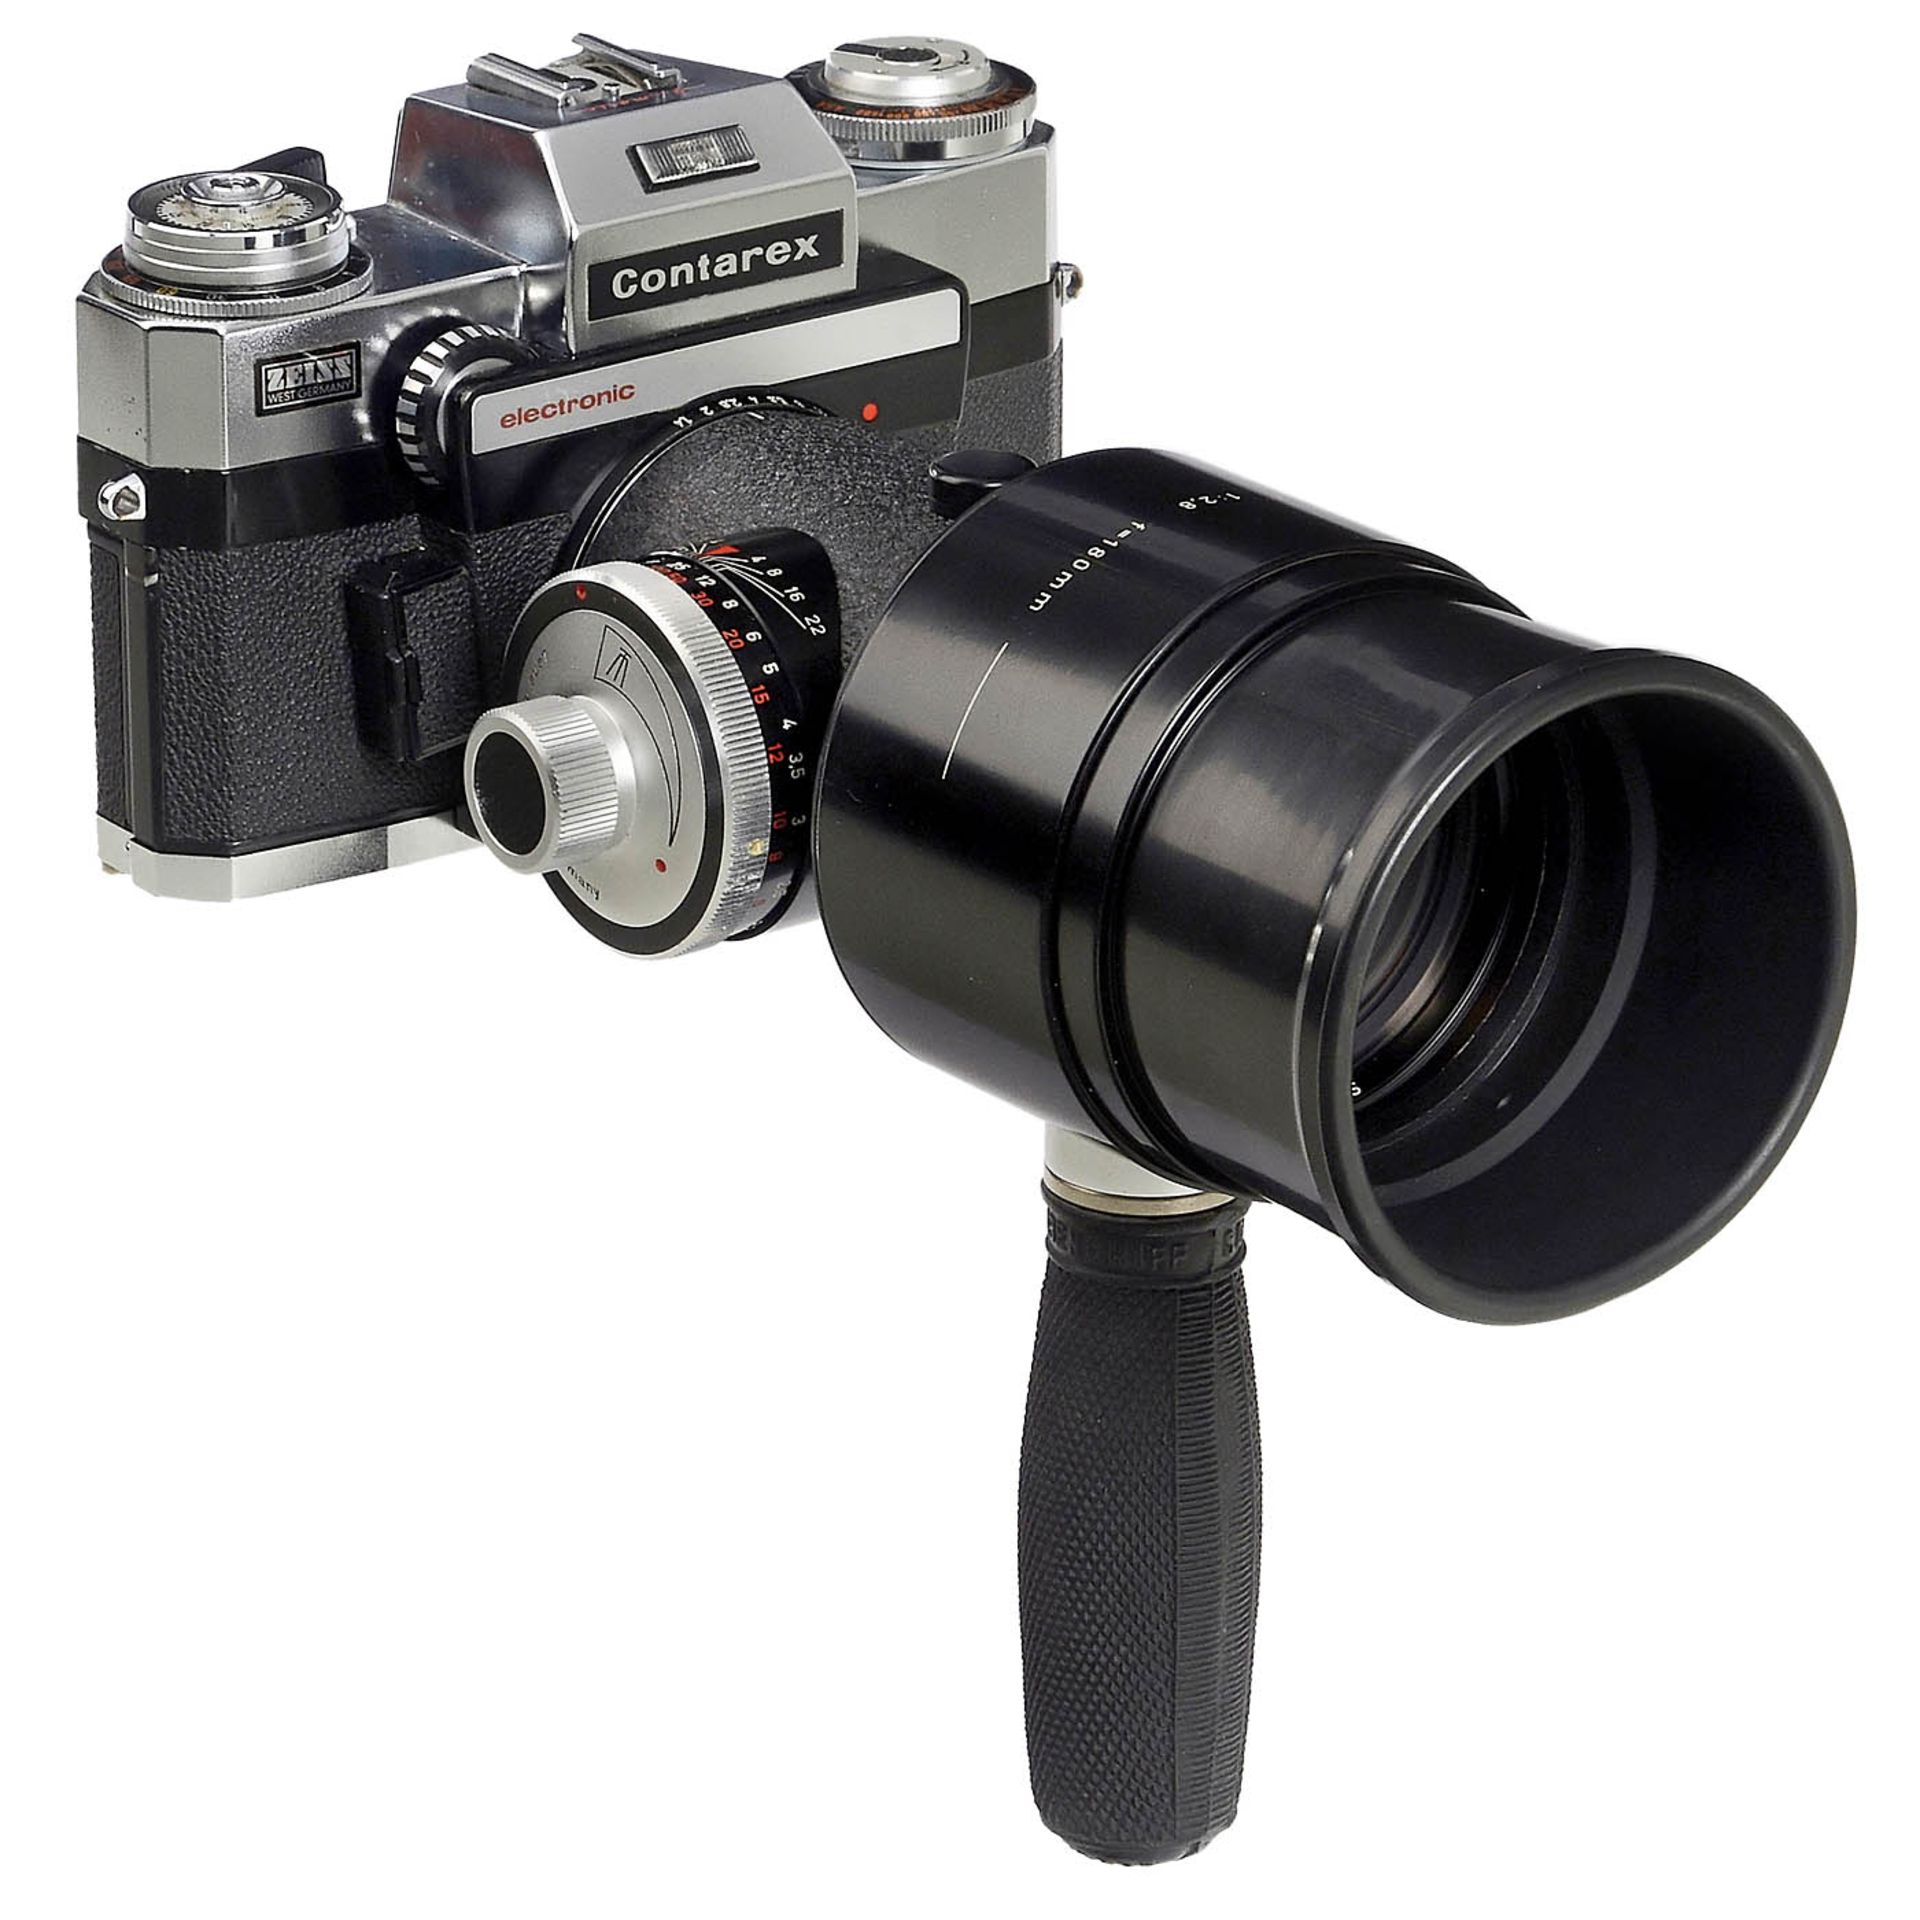 Contarex Sonnar 2.8/180 mm Lens and Contarex electronic Camera - Bild 2 aus 3